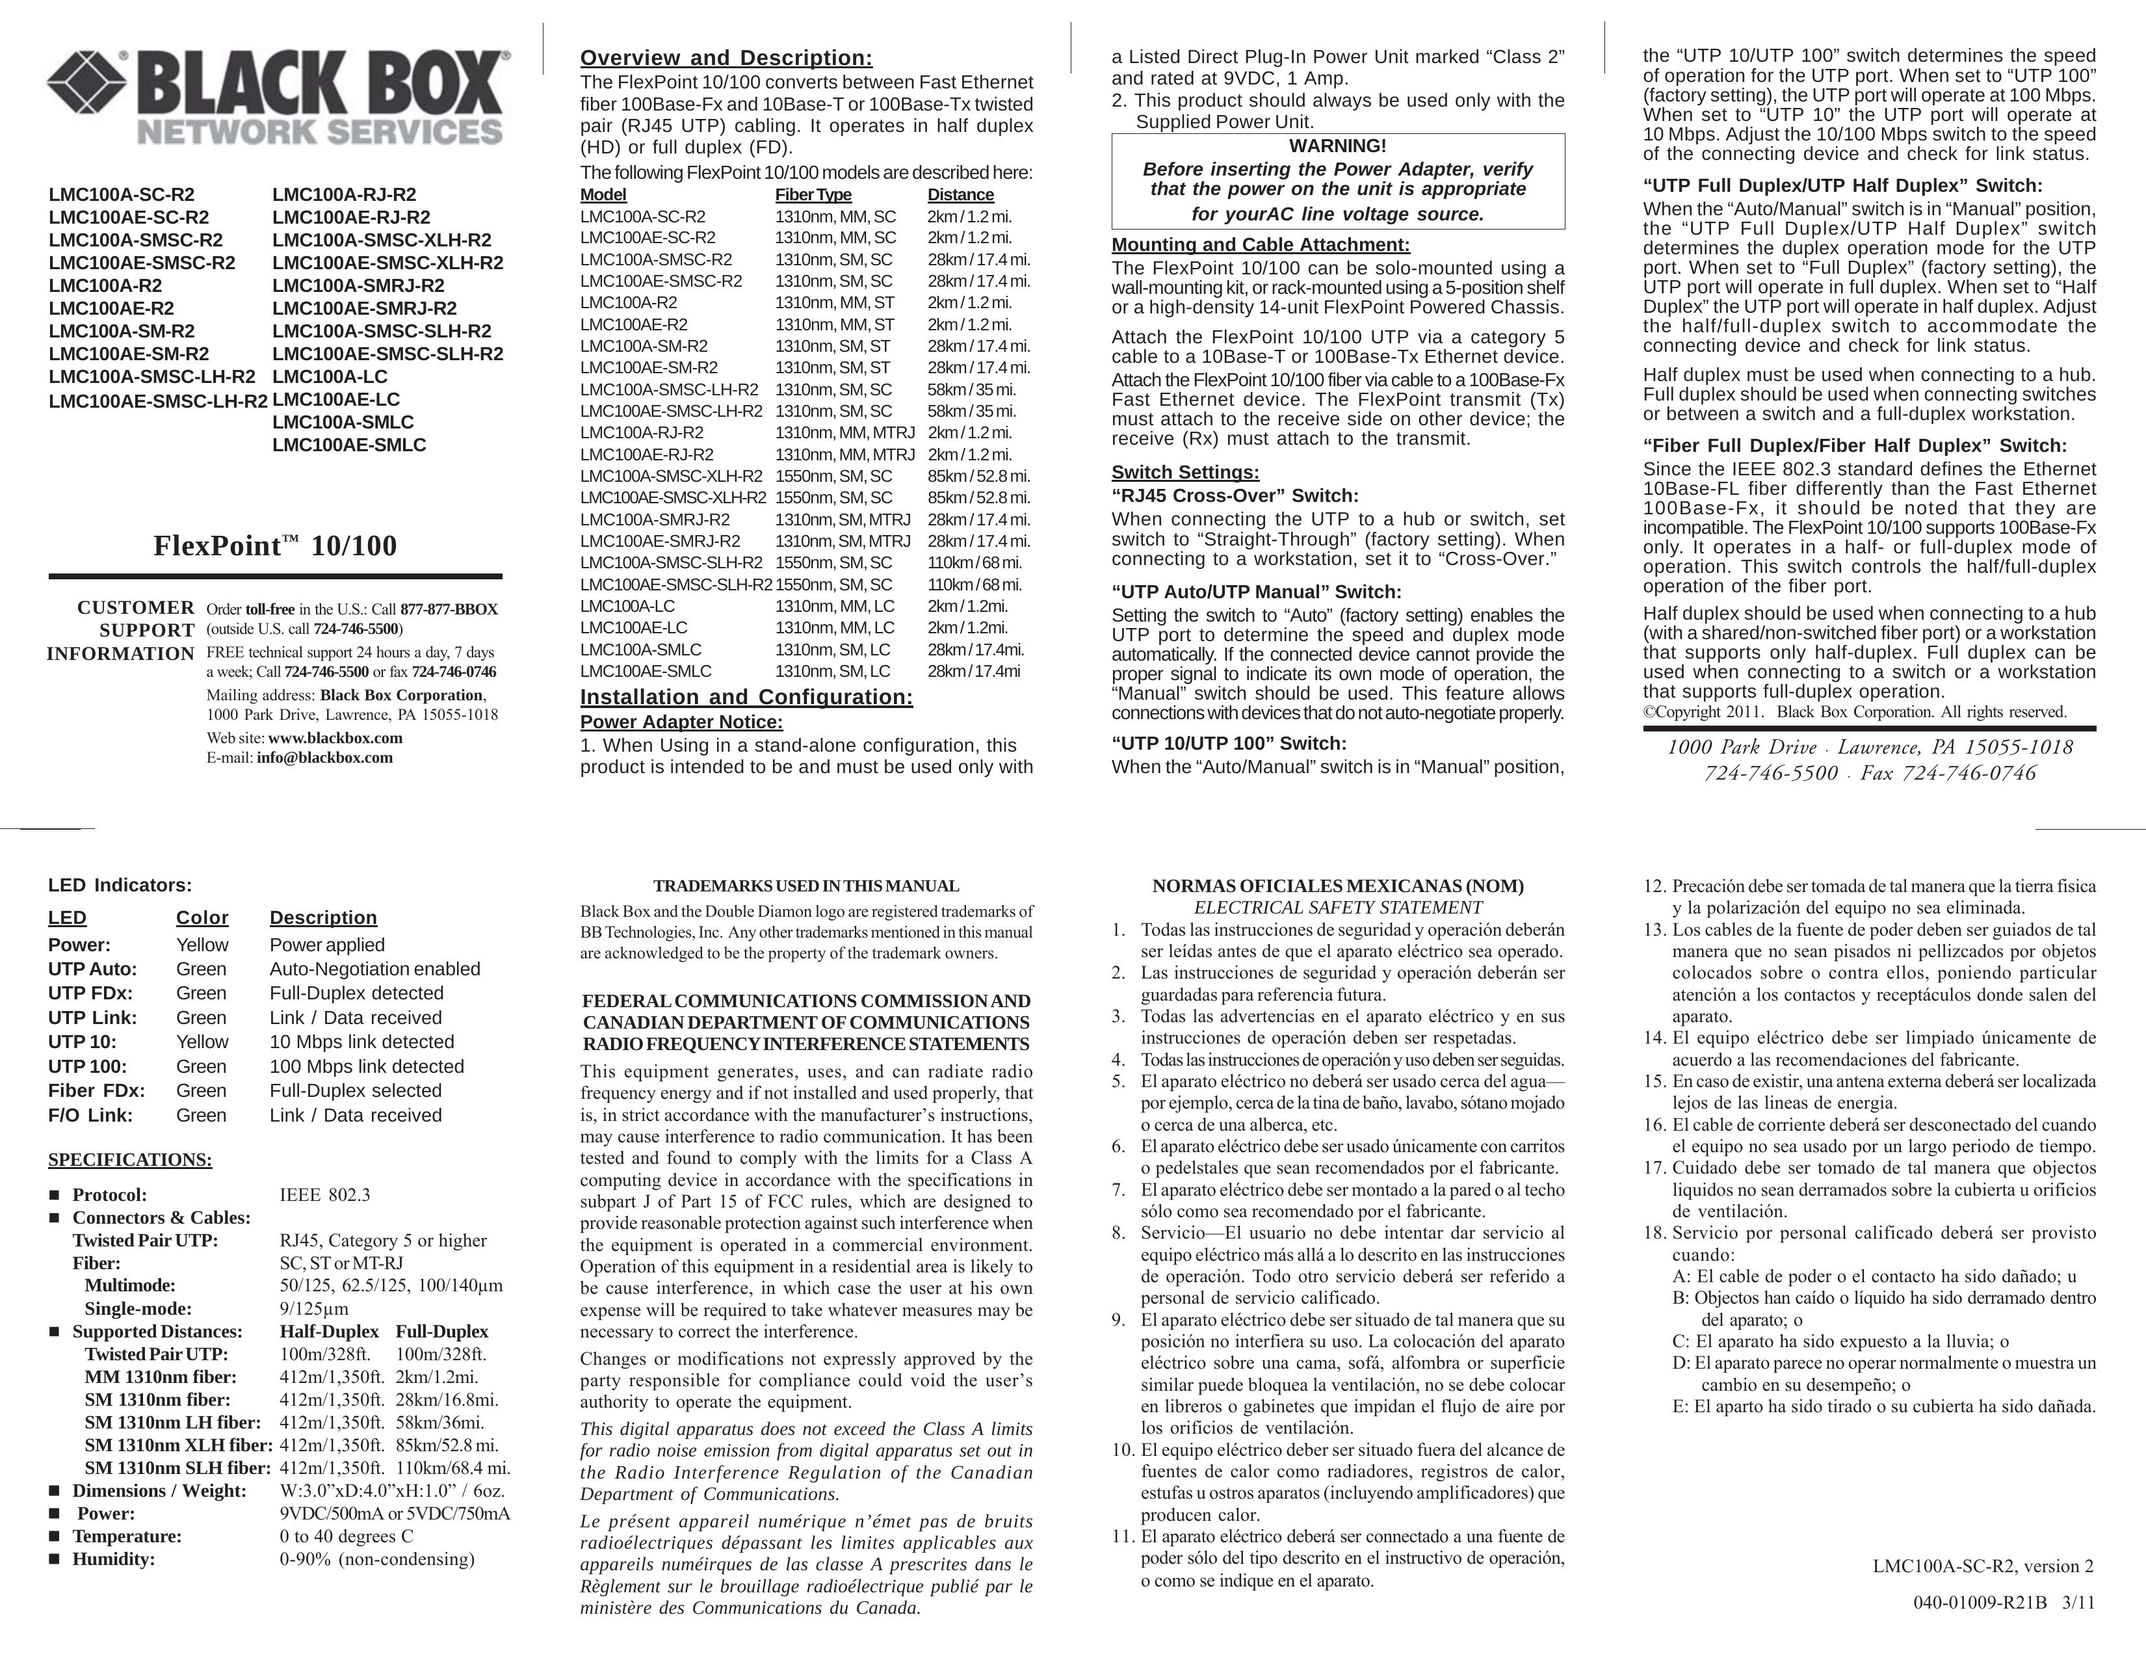 Black Box LMC100AE-SMSC-XLH-R2 Network Cables User Manual